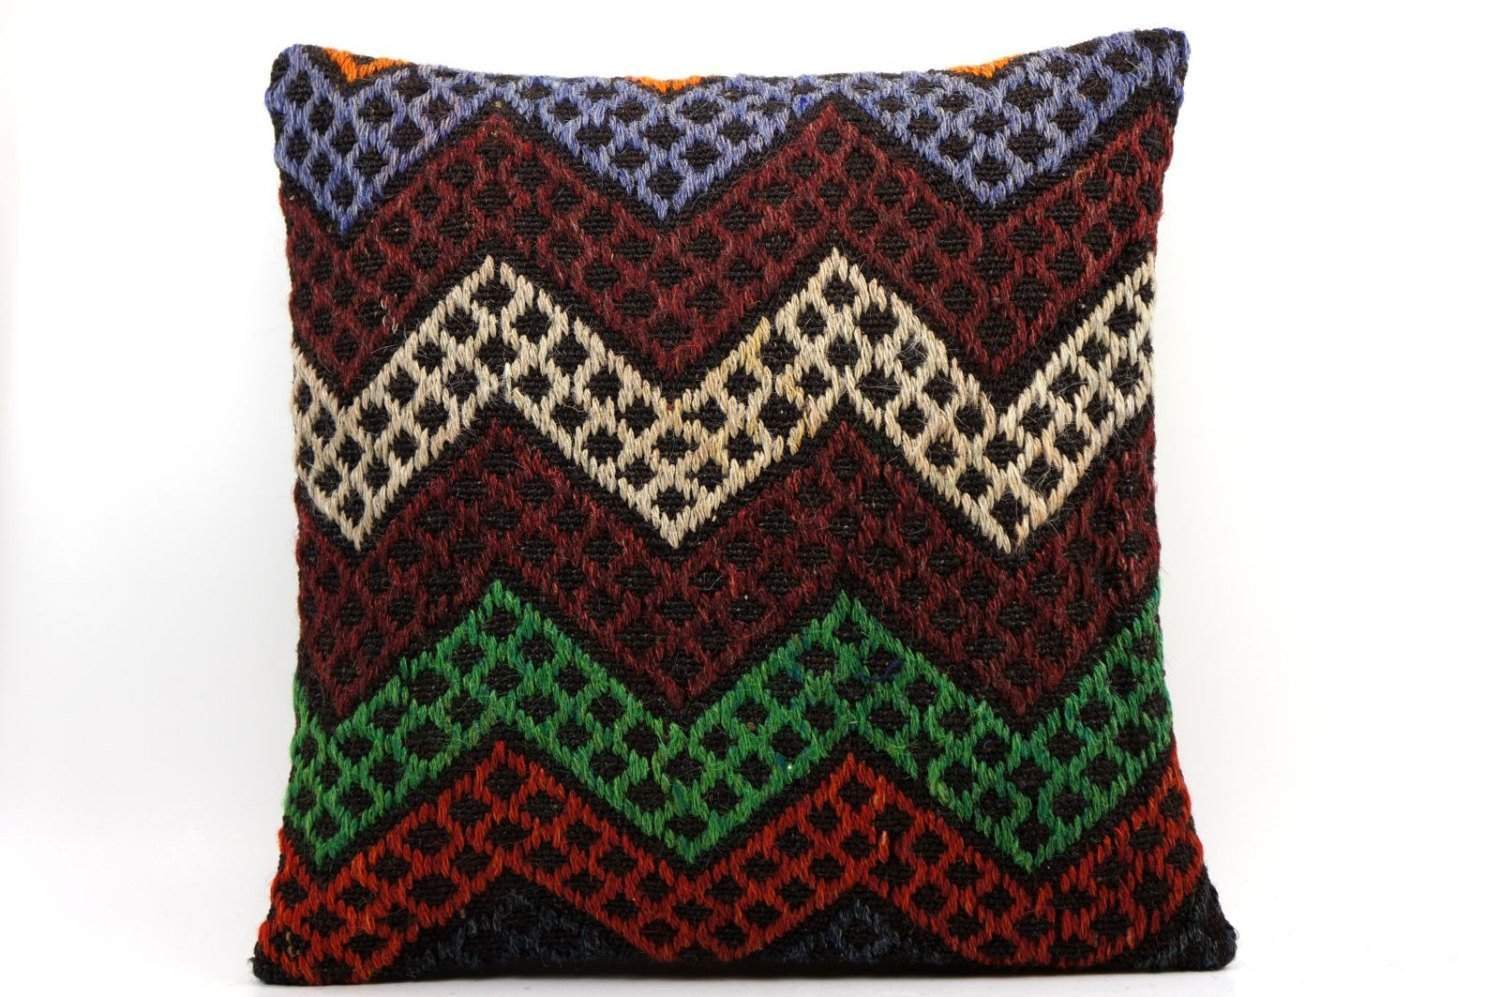 16x16 Vintage Hand Woven Kilim Pillow 498,white,green,blue,black,red,claret red,chevron